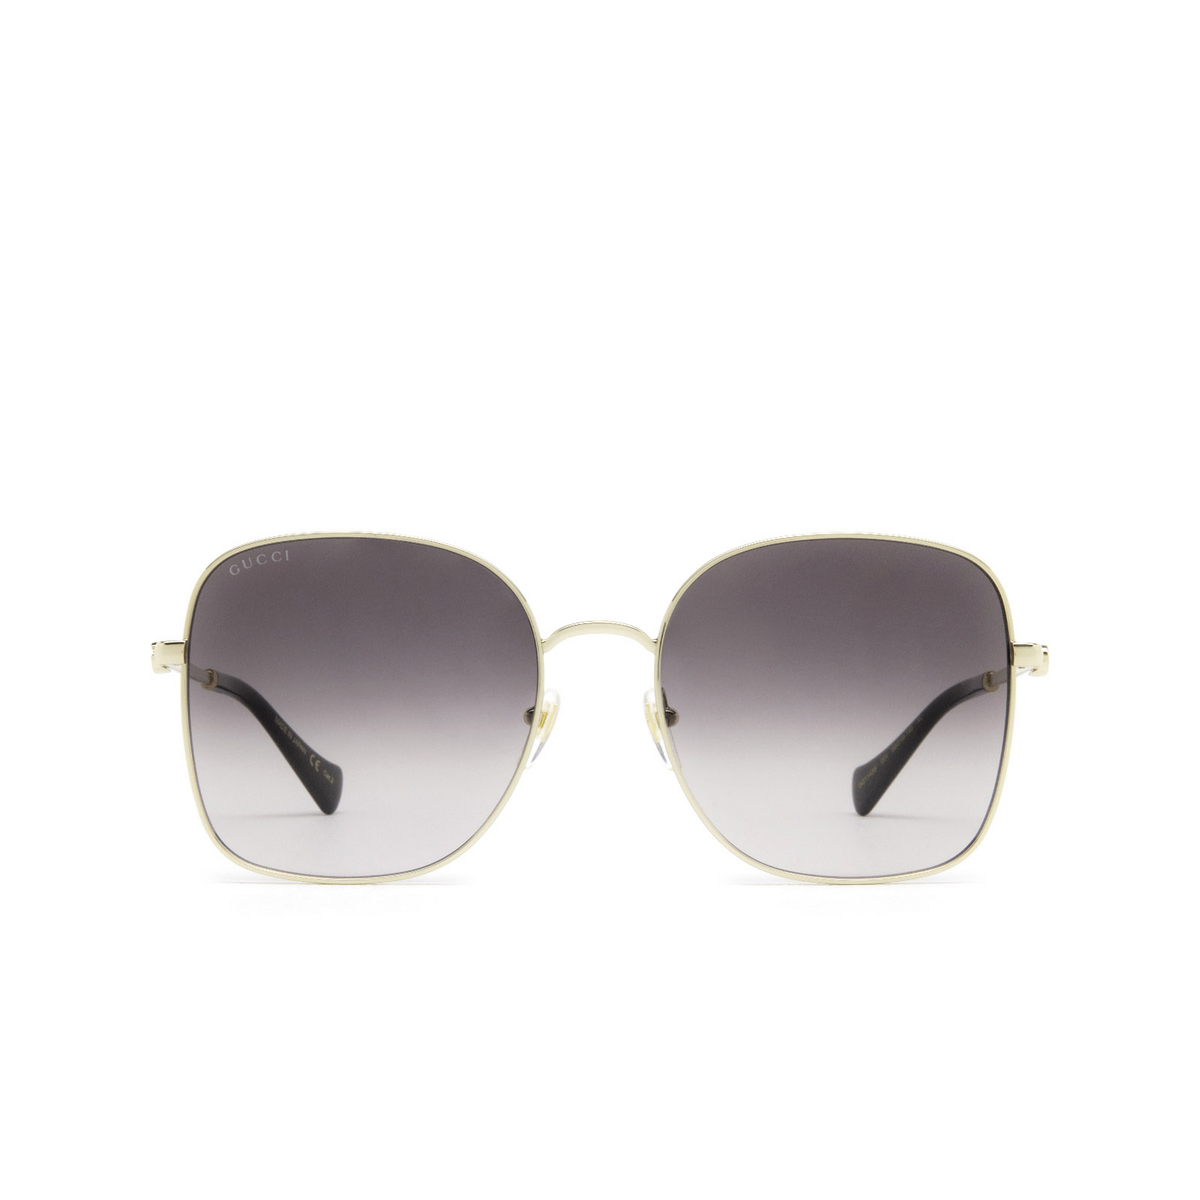 Gucci® Square Sunglasses: GG1143S color Gold 001 - front view.